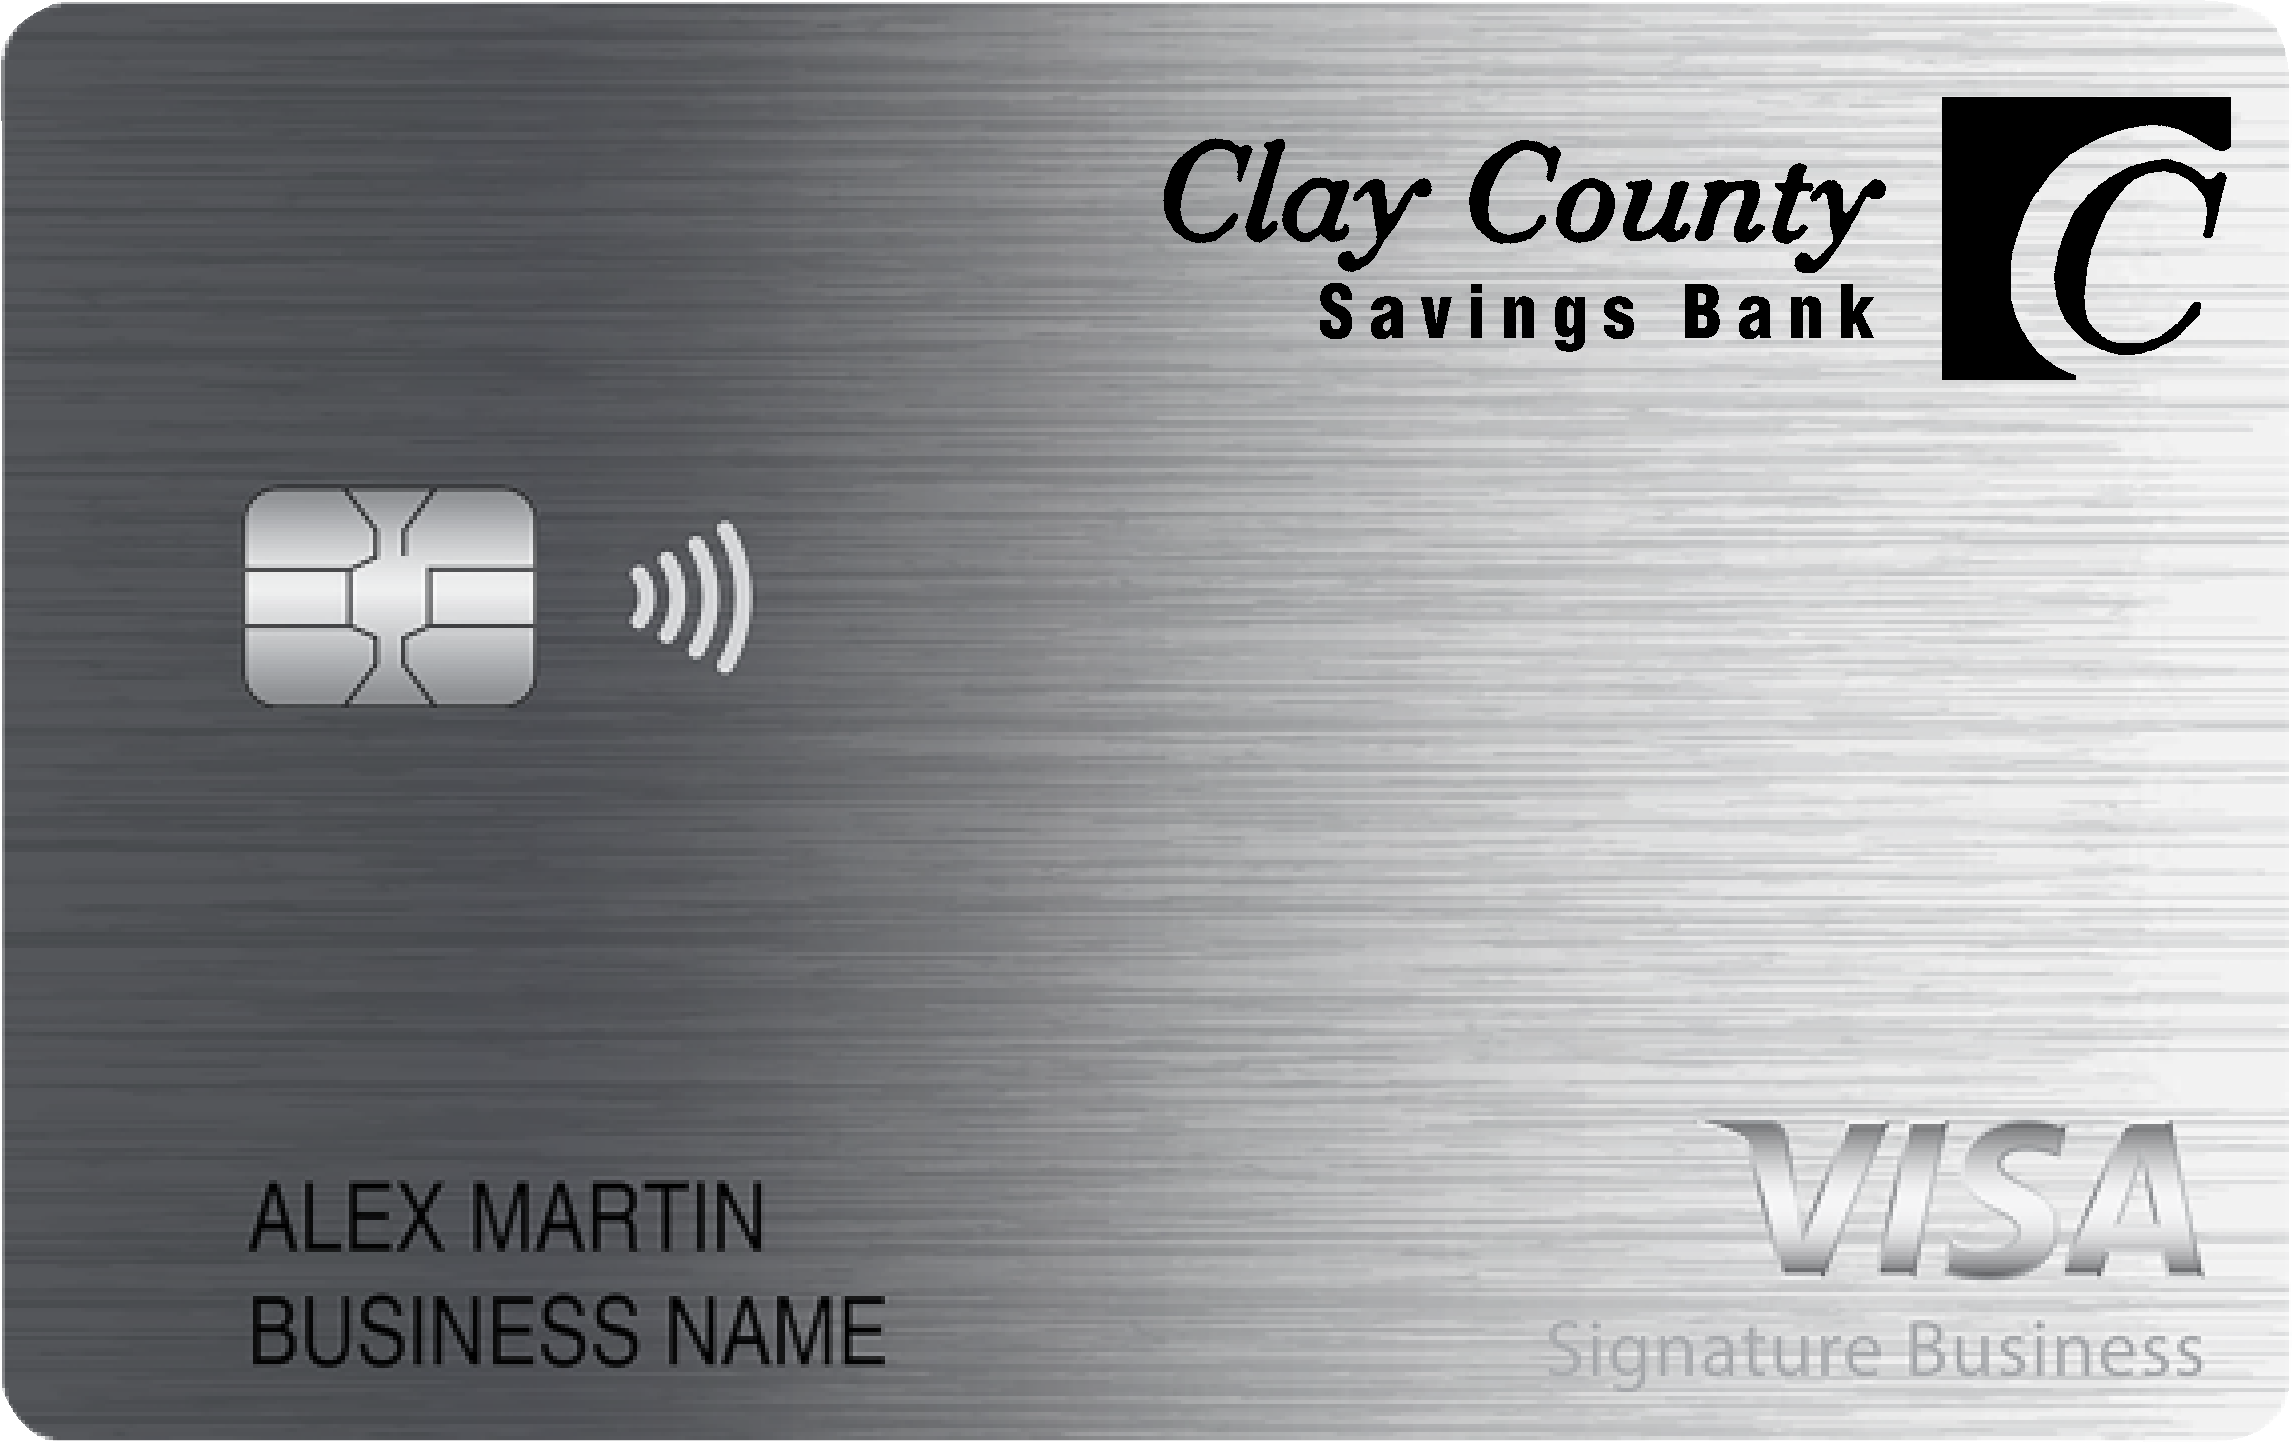 Clay County Savings Bank